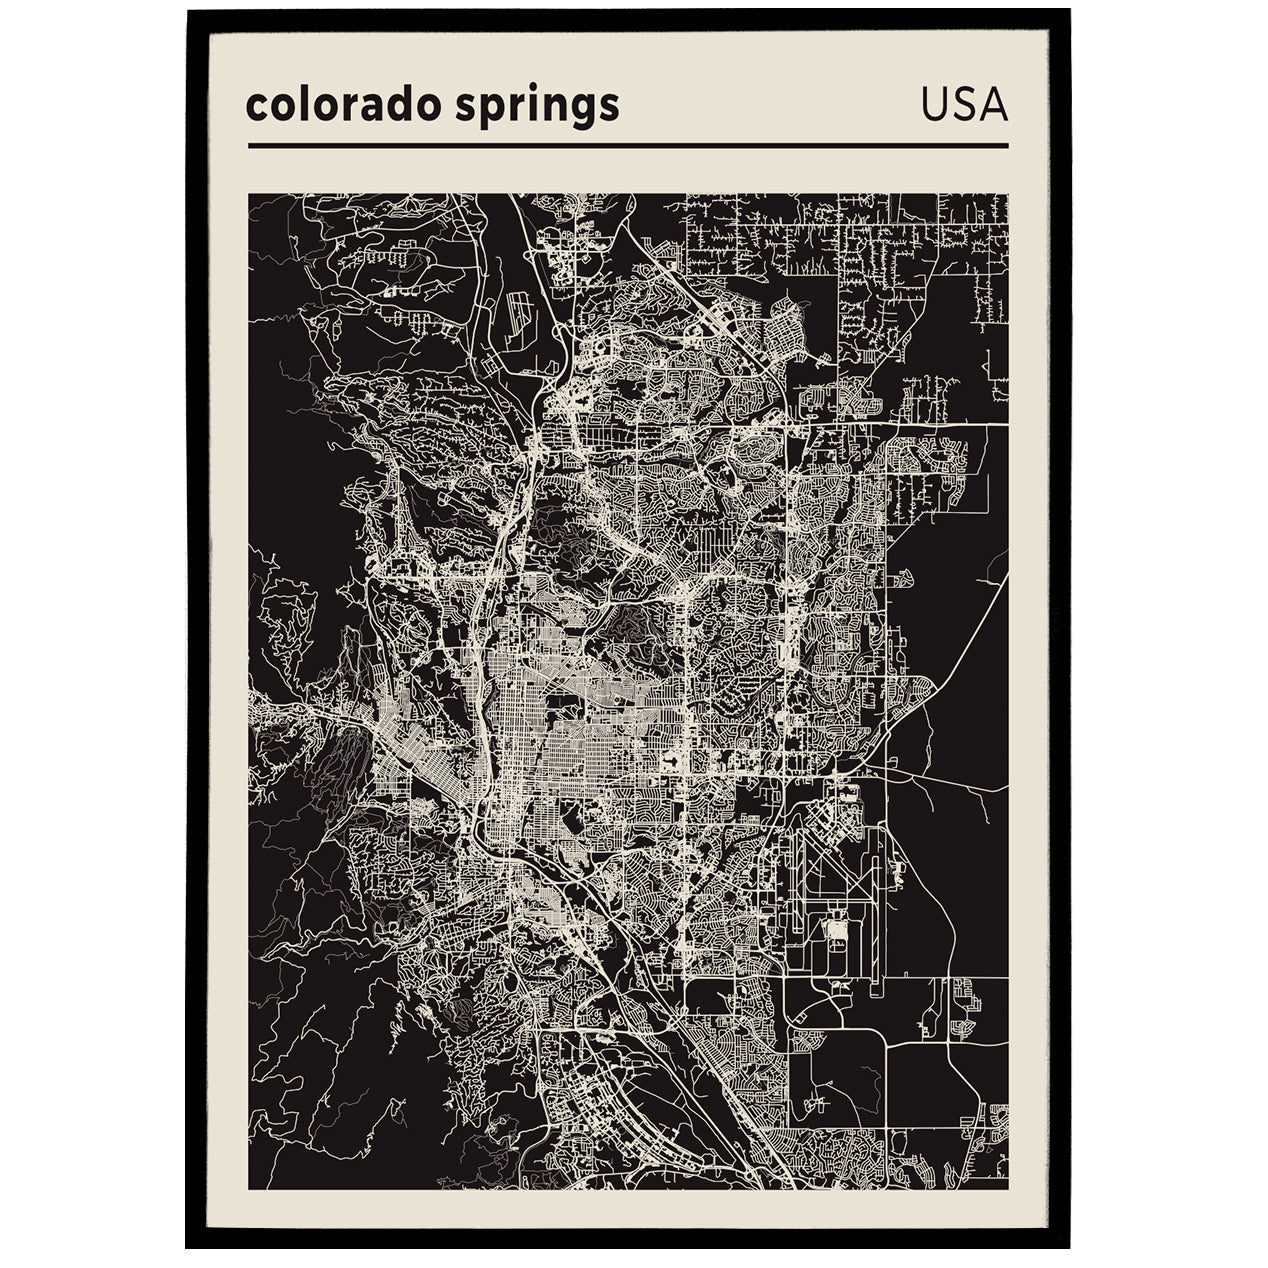 Colorado Springs Map Poster - USA